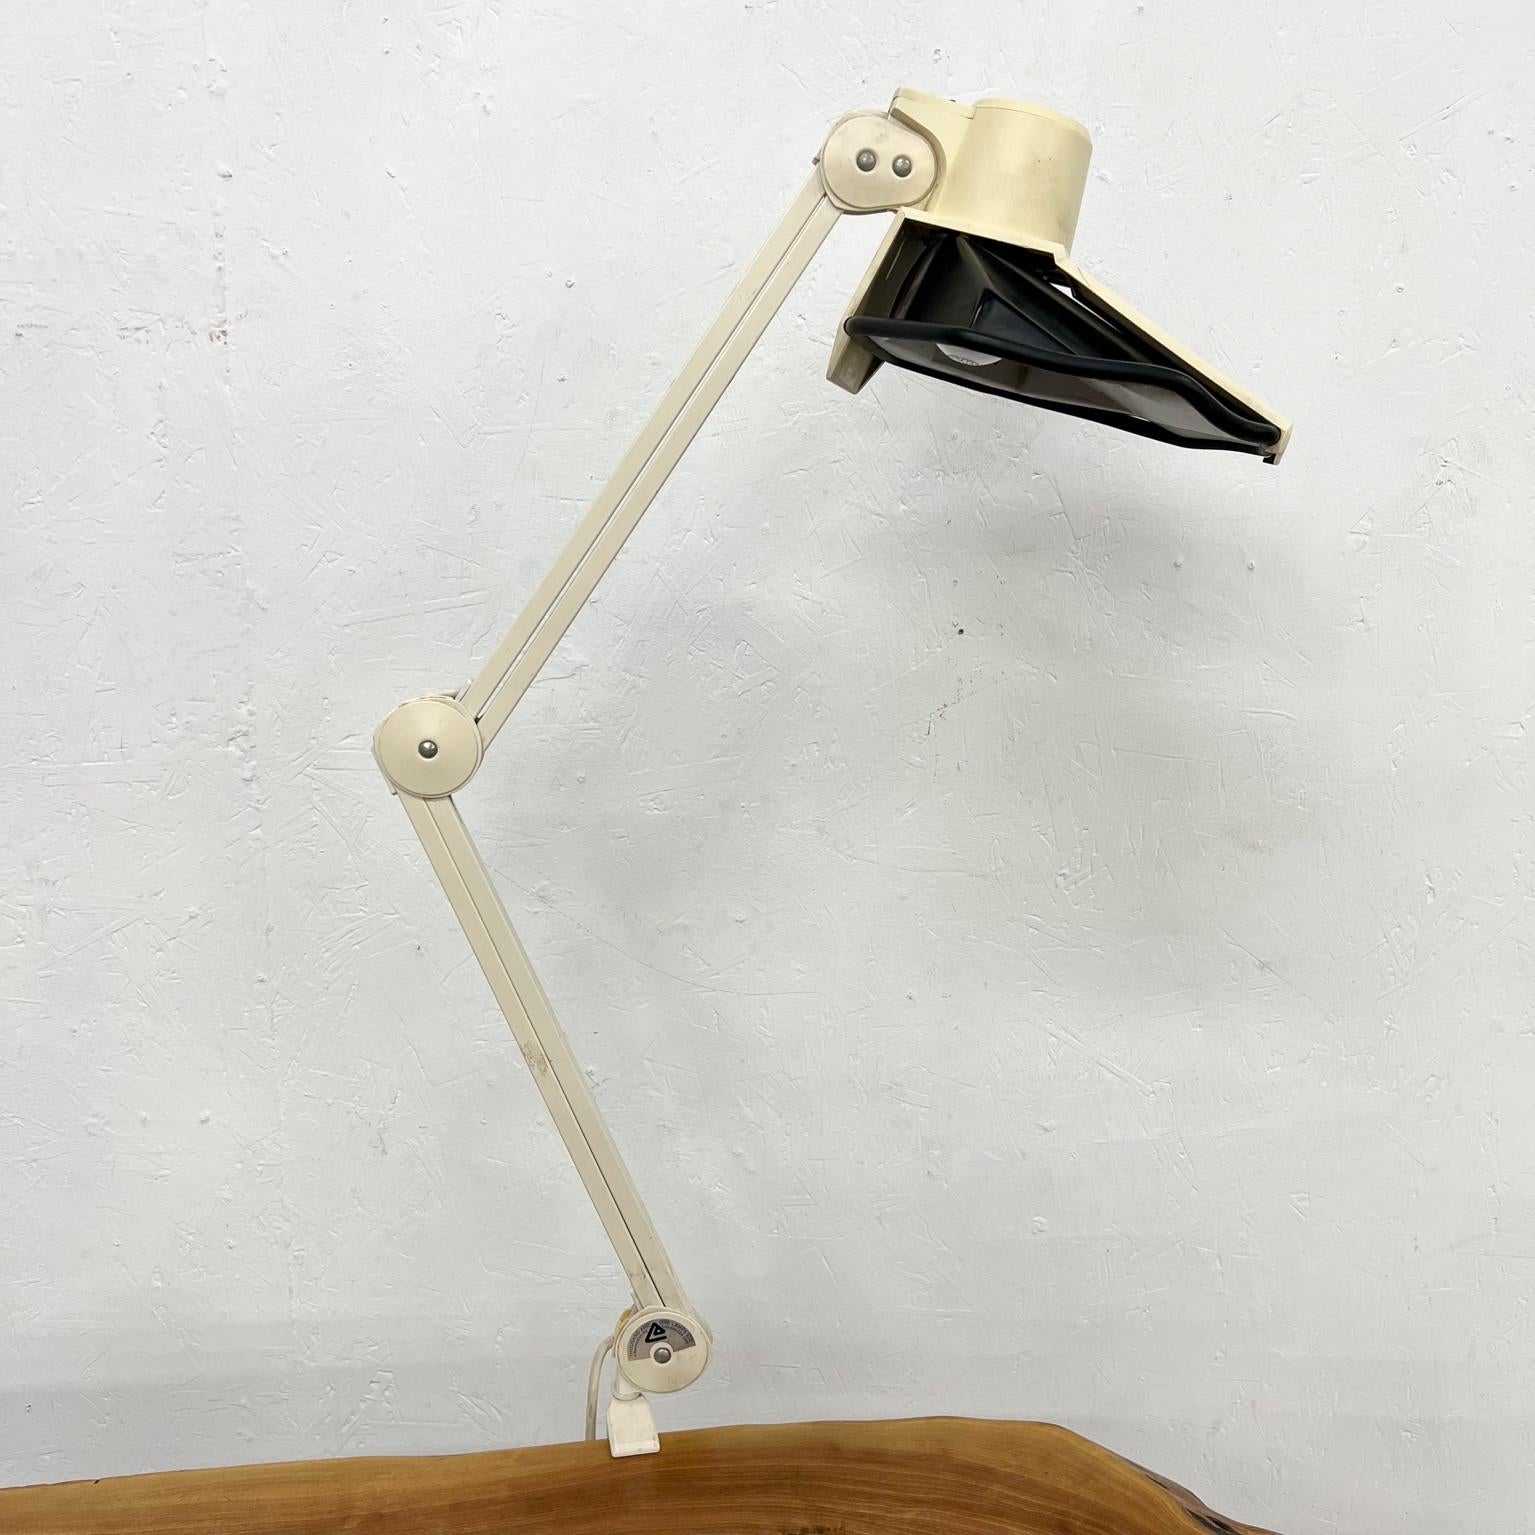 1970s LUXO Architect Rare Vintage Task Clamp Lamp for Desk Jac Jacobsen For Sale 2